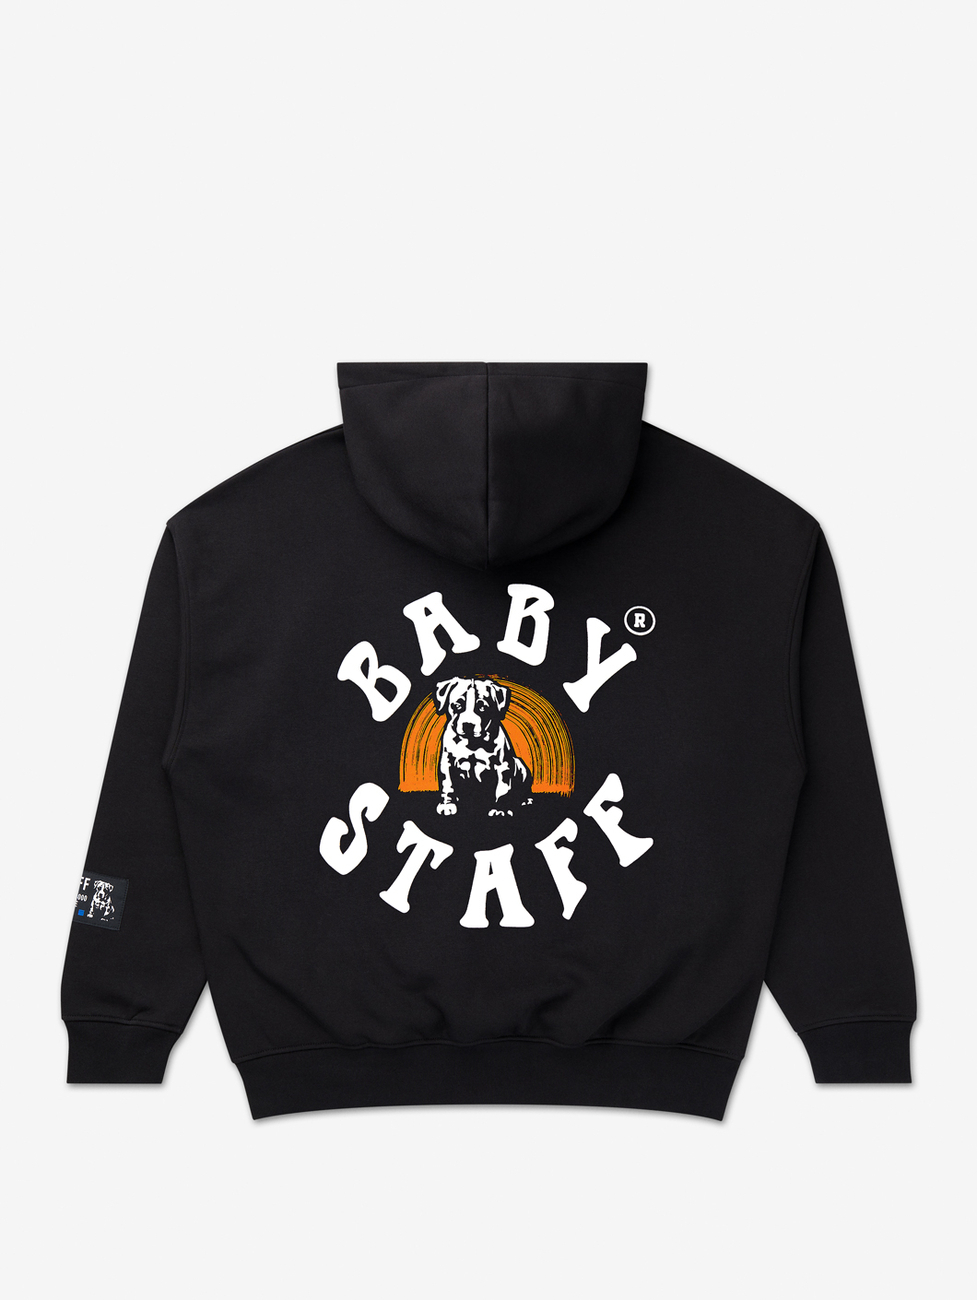 Babystaff Senya Oversize Hoodie XL